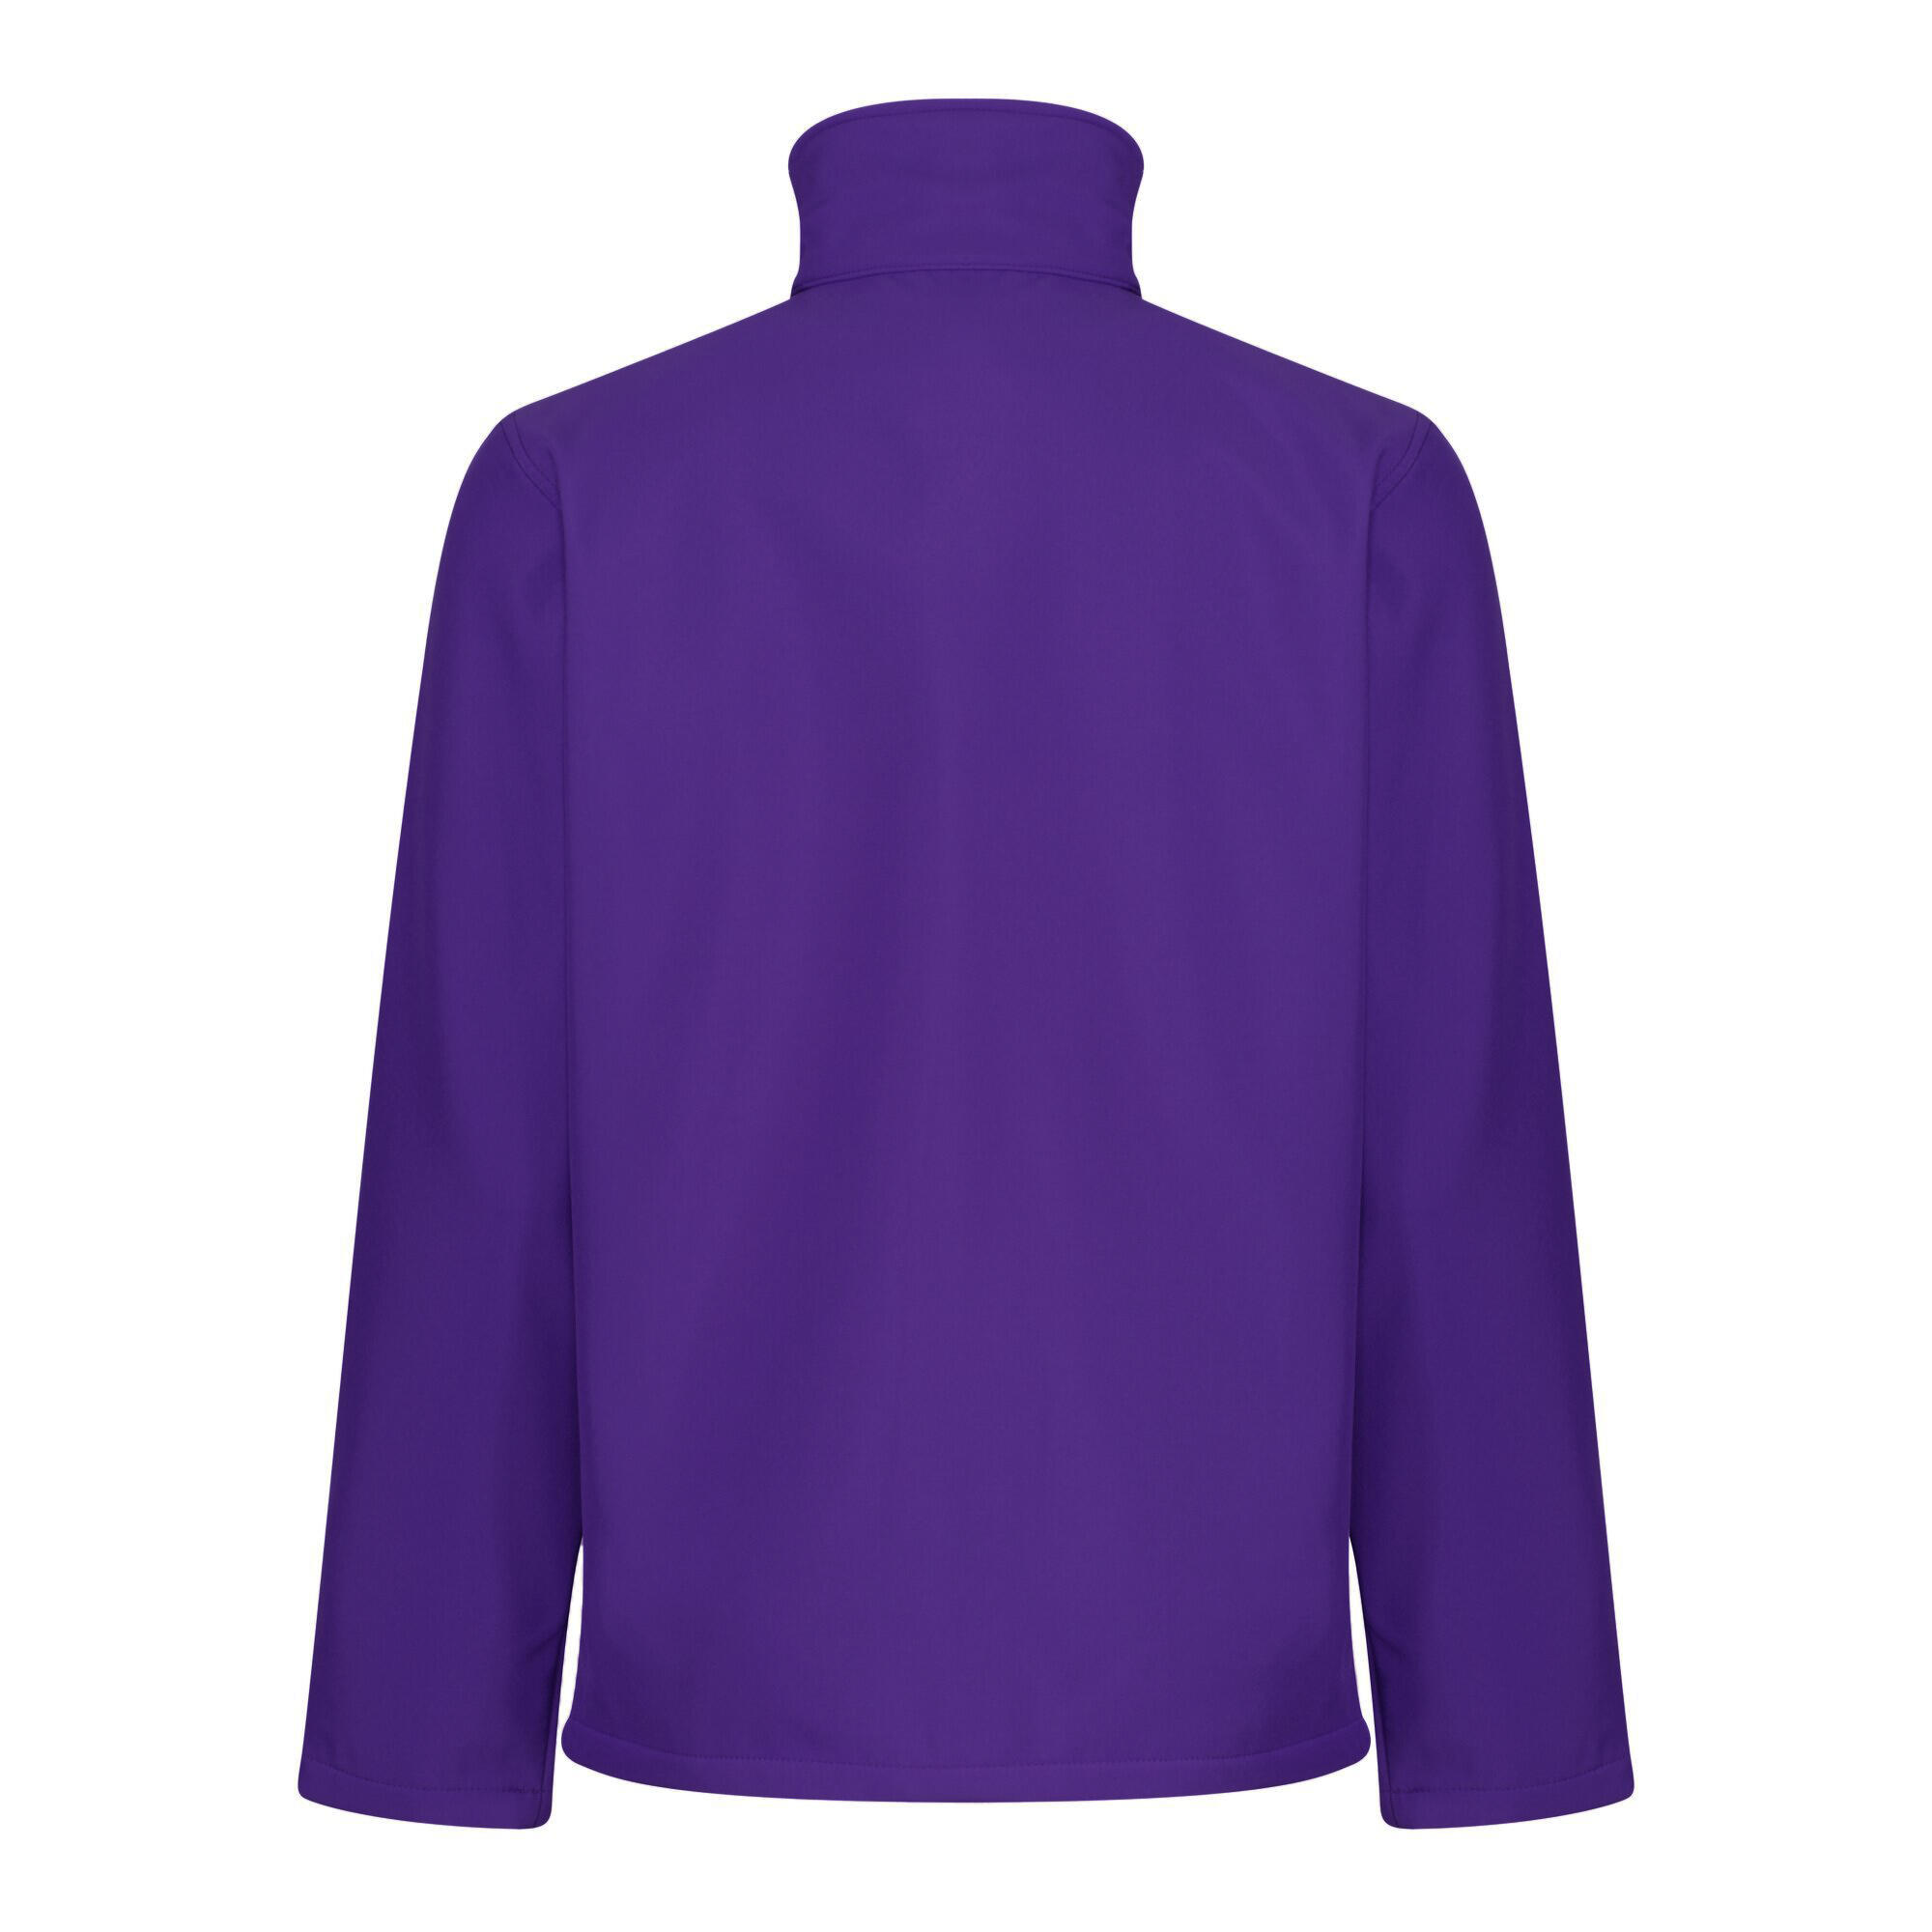 Standout Mens Ablaze Printable Soft Shell Jacket (Vibrant Purple/Black) 2/4